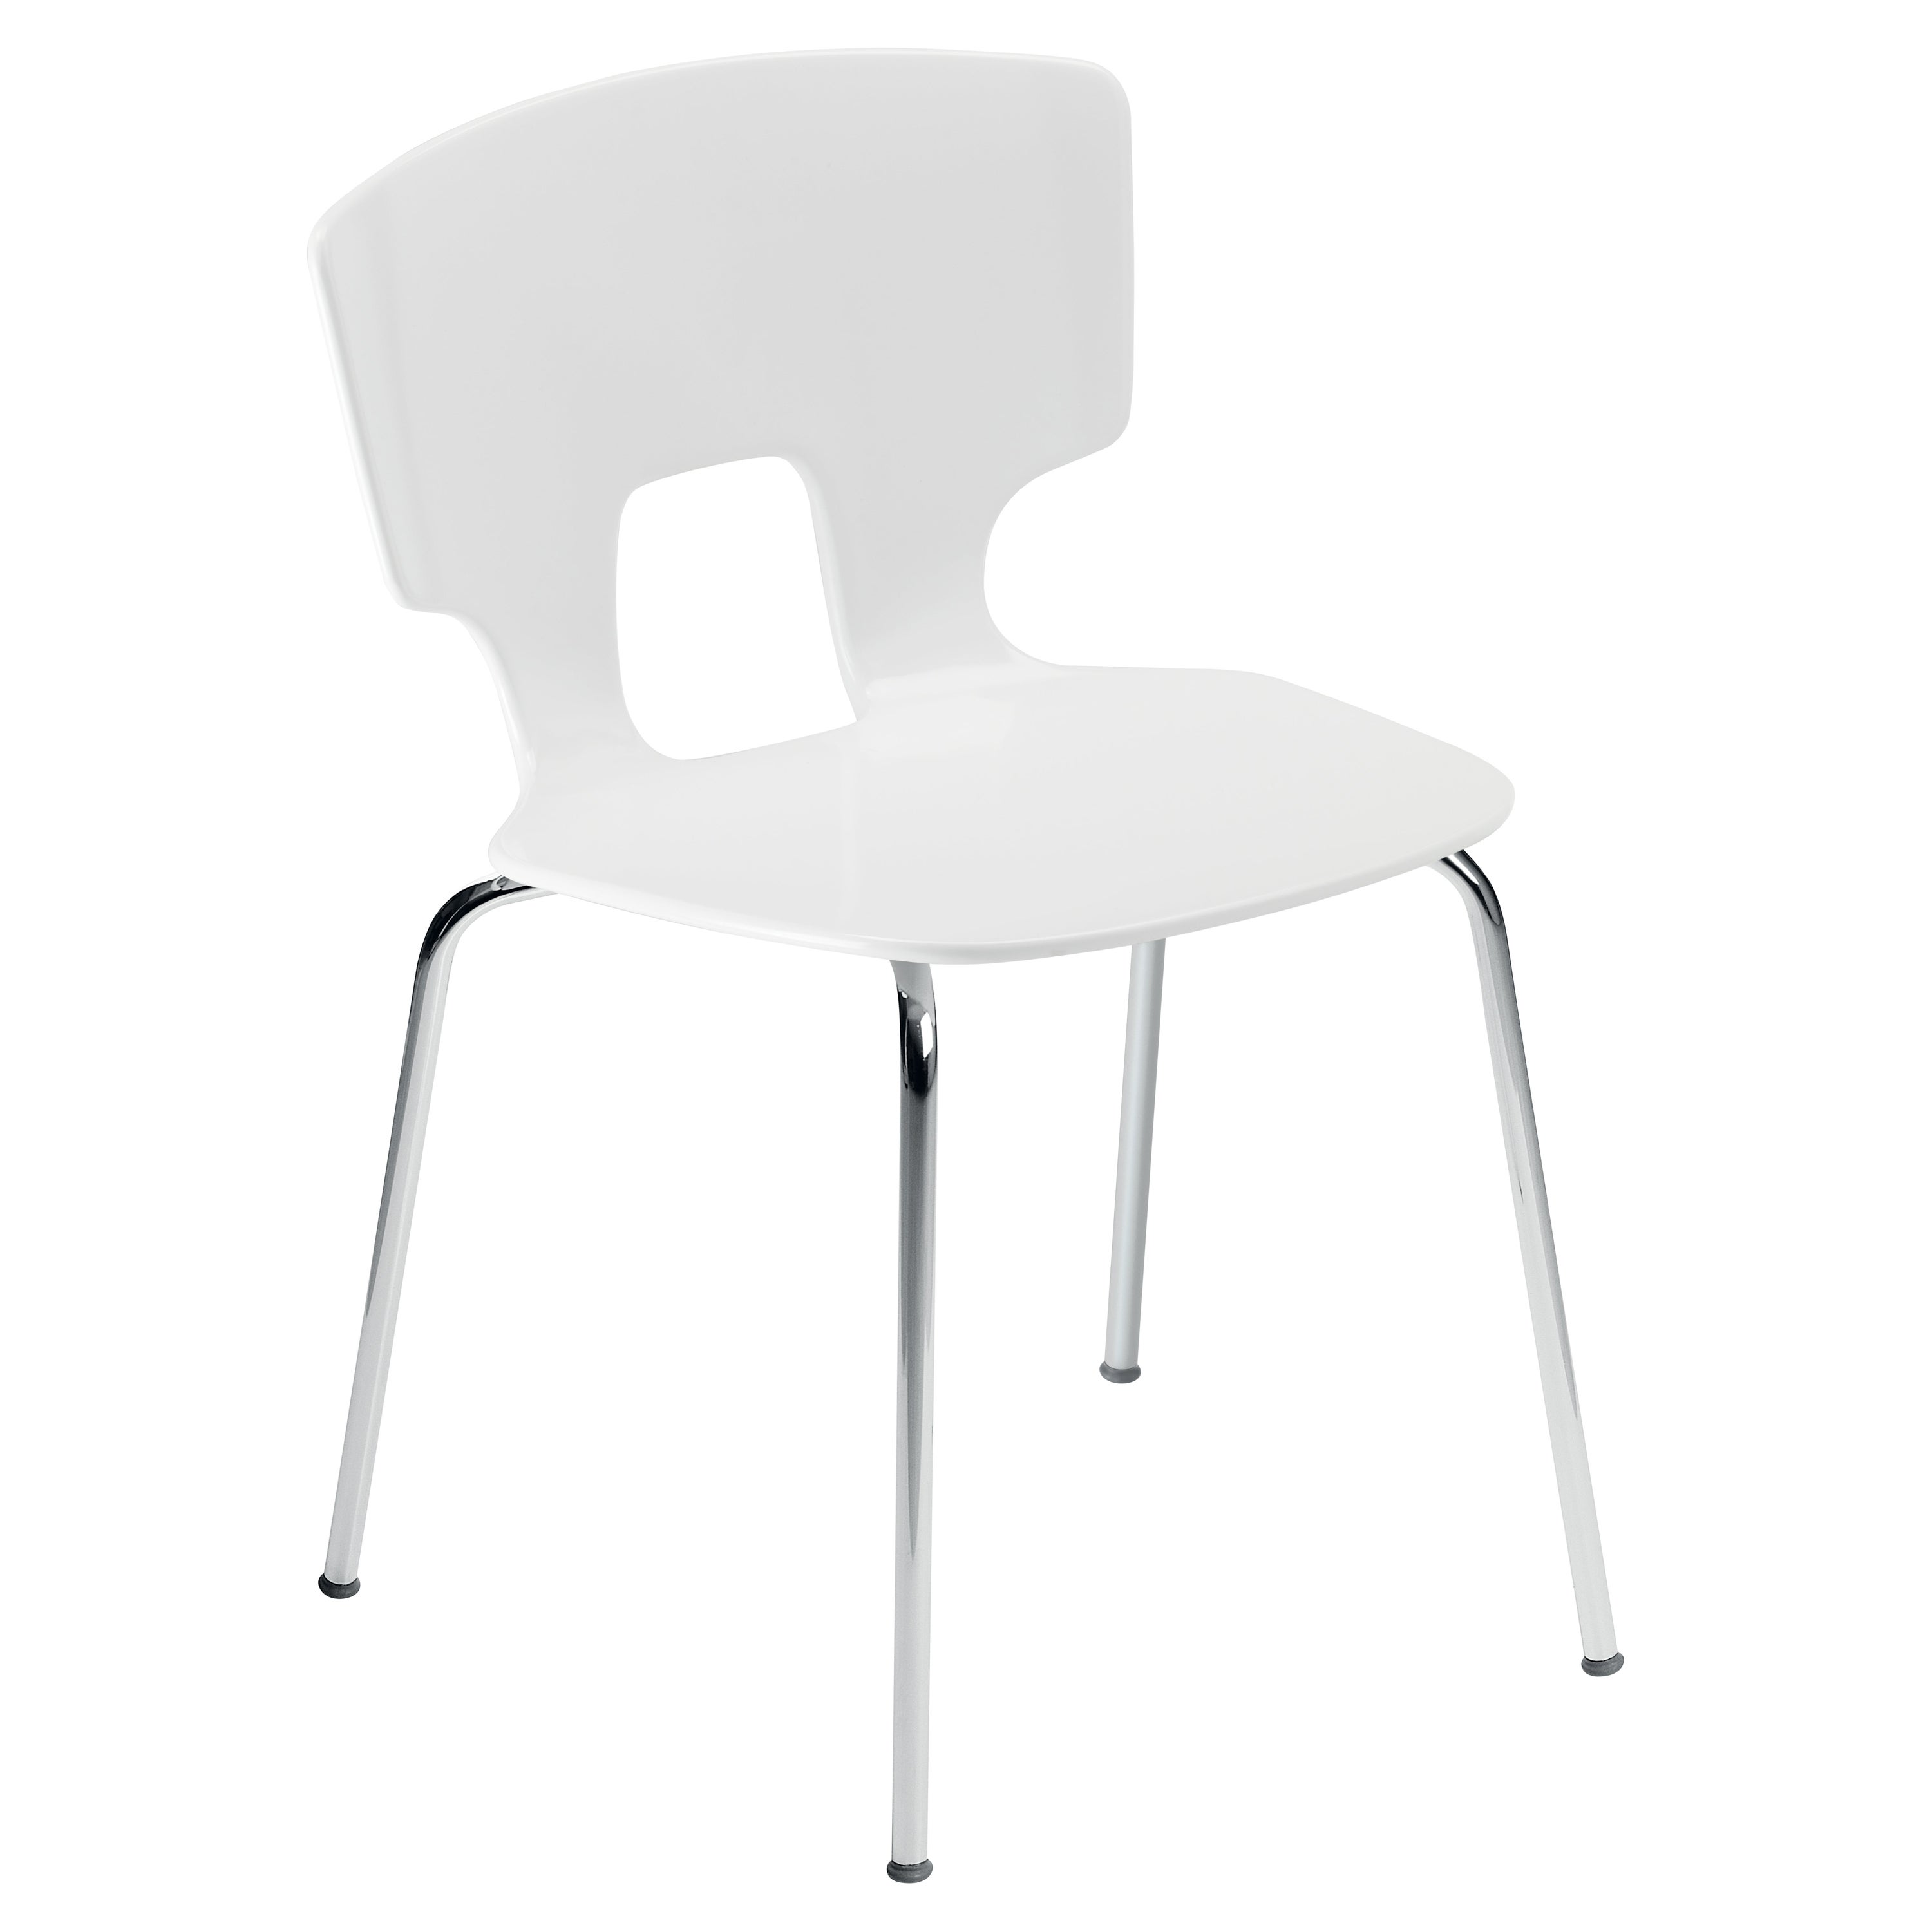 Alias 50A Erice Chair in White Chromed Steel Frame by Alfredo Häberli